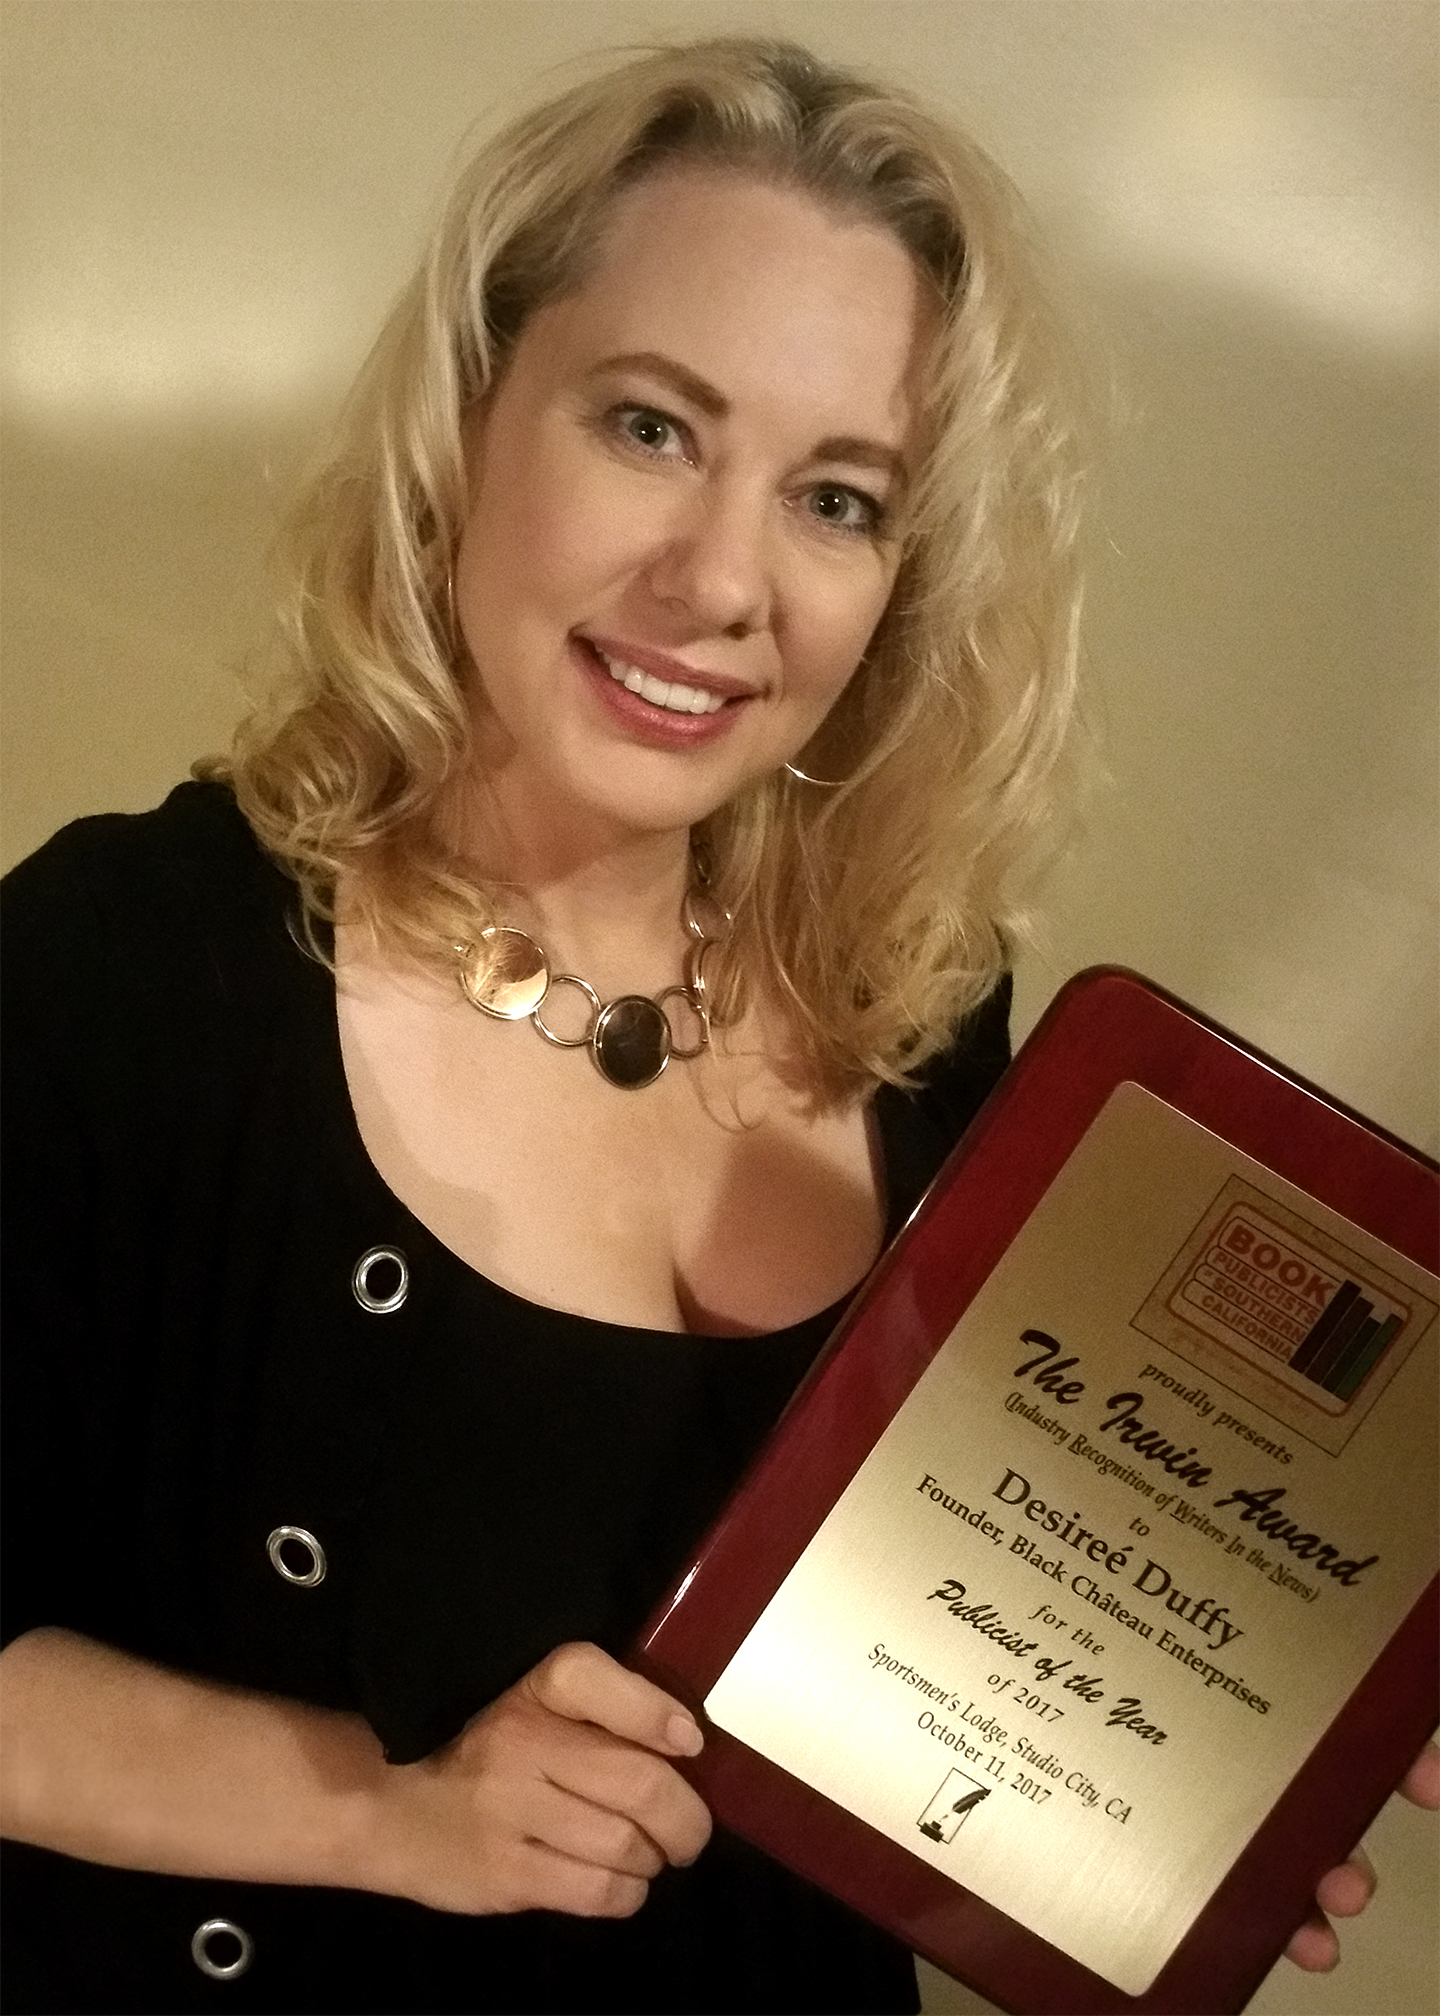 Desiree Duffy, Black Chateau, Book PR, Publicist, Award, Publicist of the Year